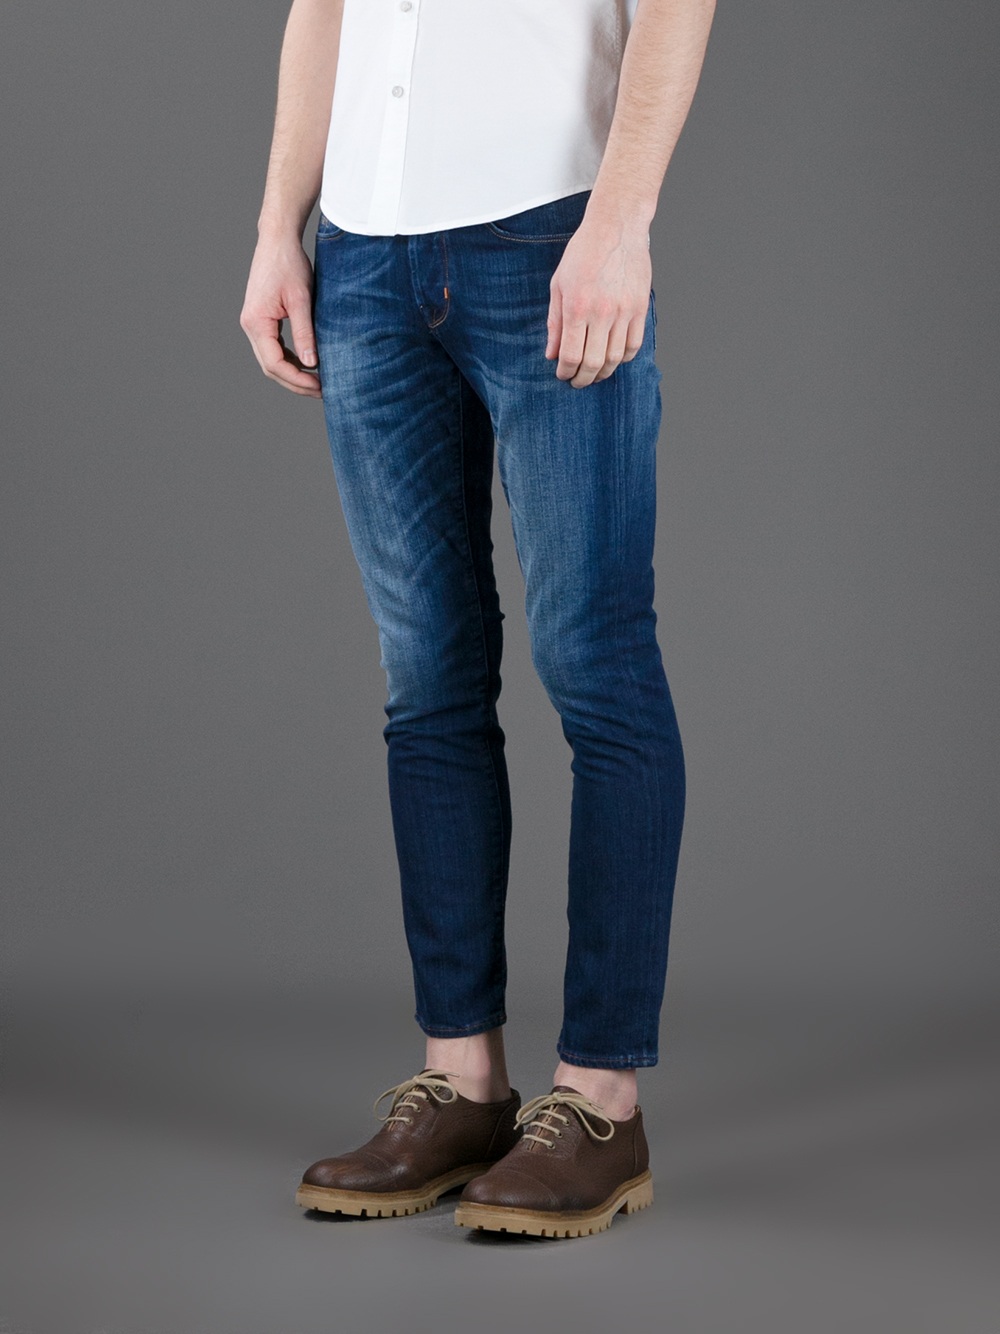 jacob cohen skinny jeans mens